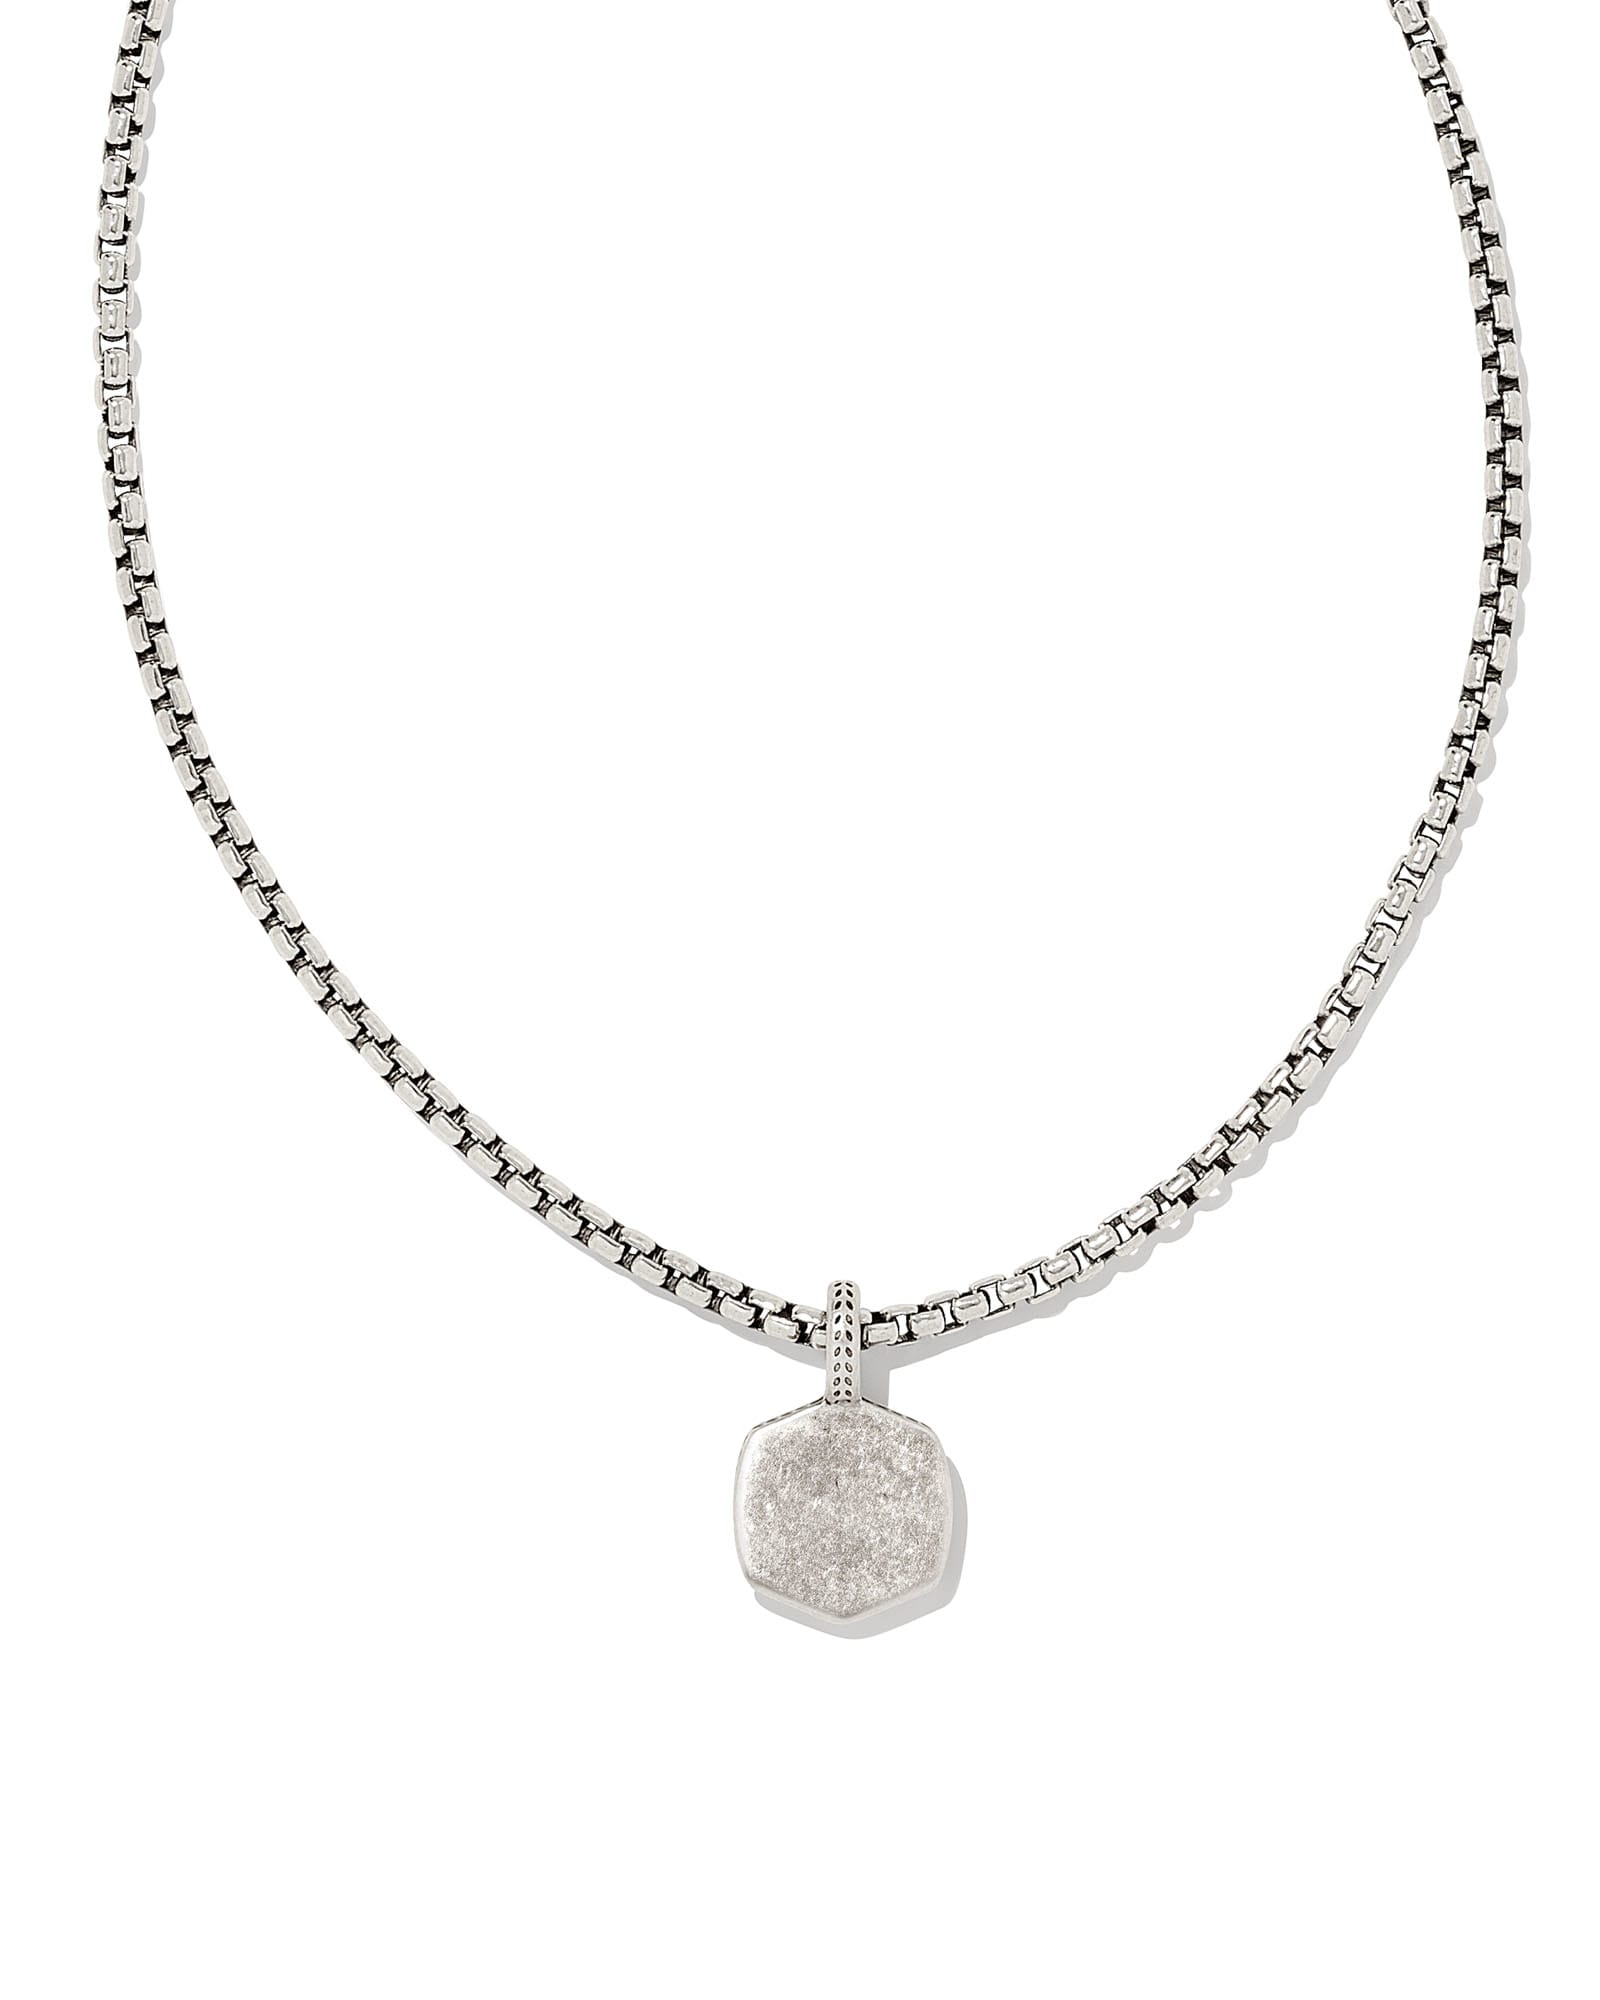 Kendra Scott California Pendant Necklace in Sterling Silver